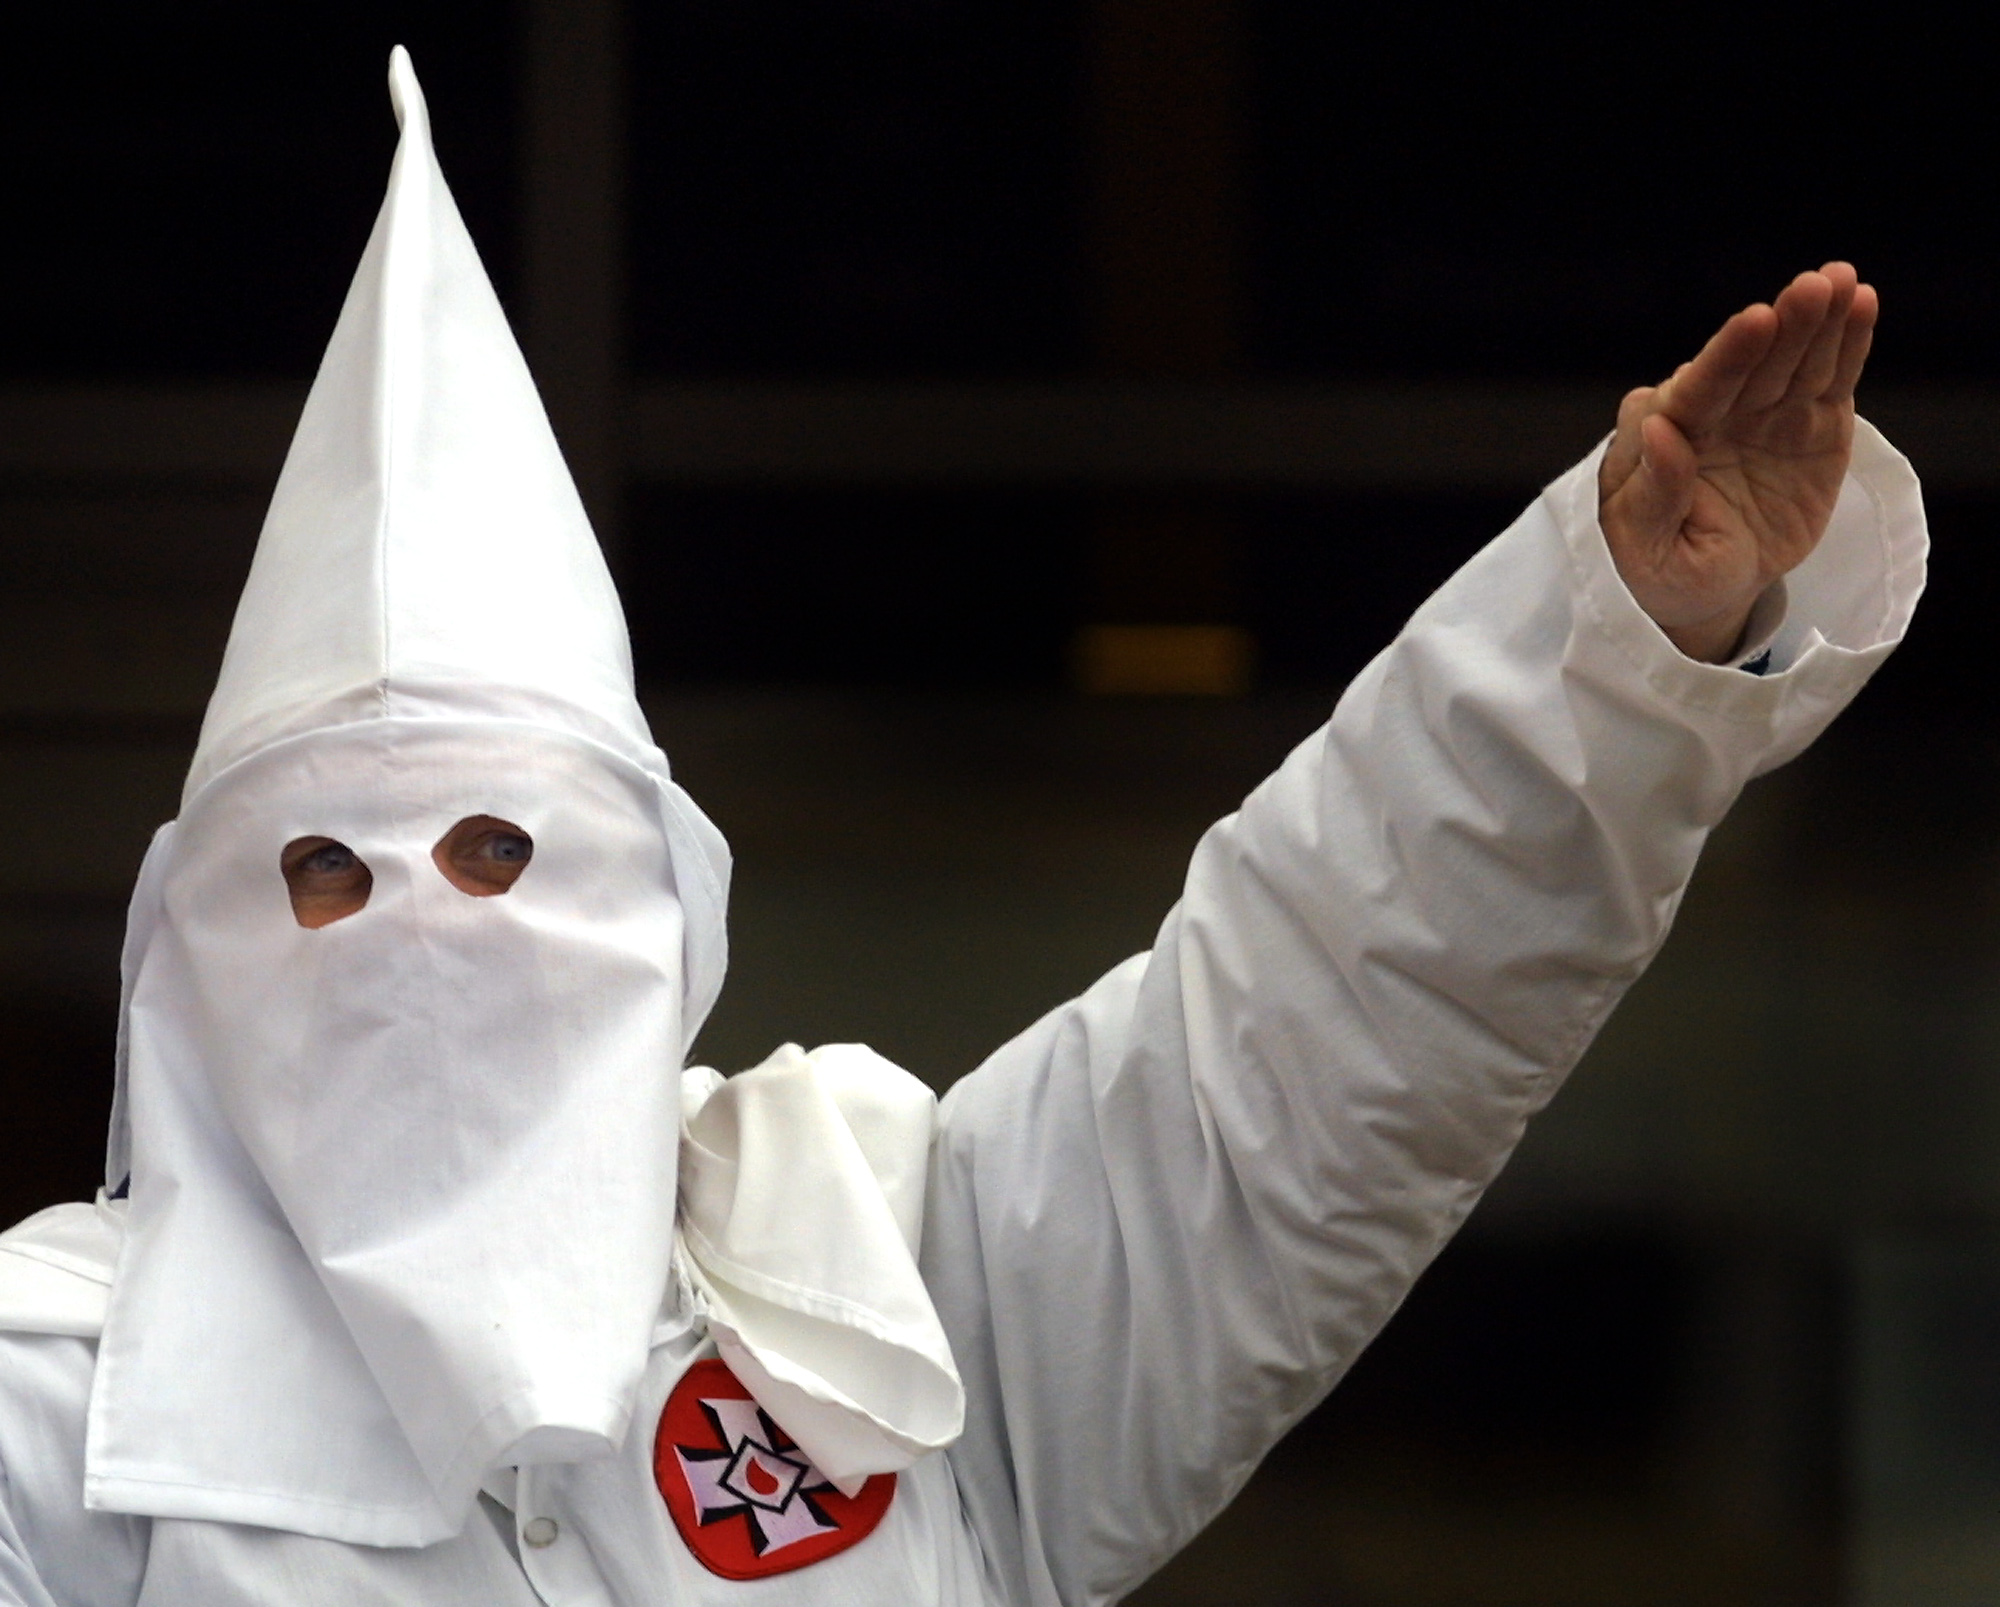 Sheriff's KKK Costume Photo Goes Viral